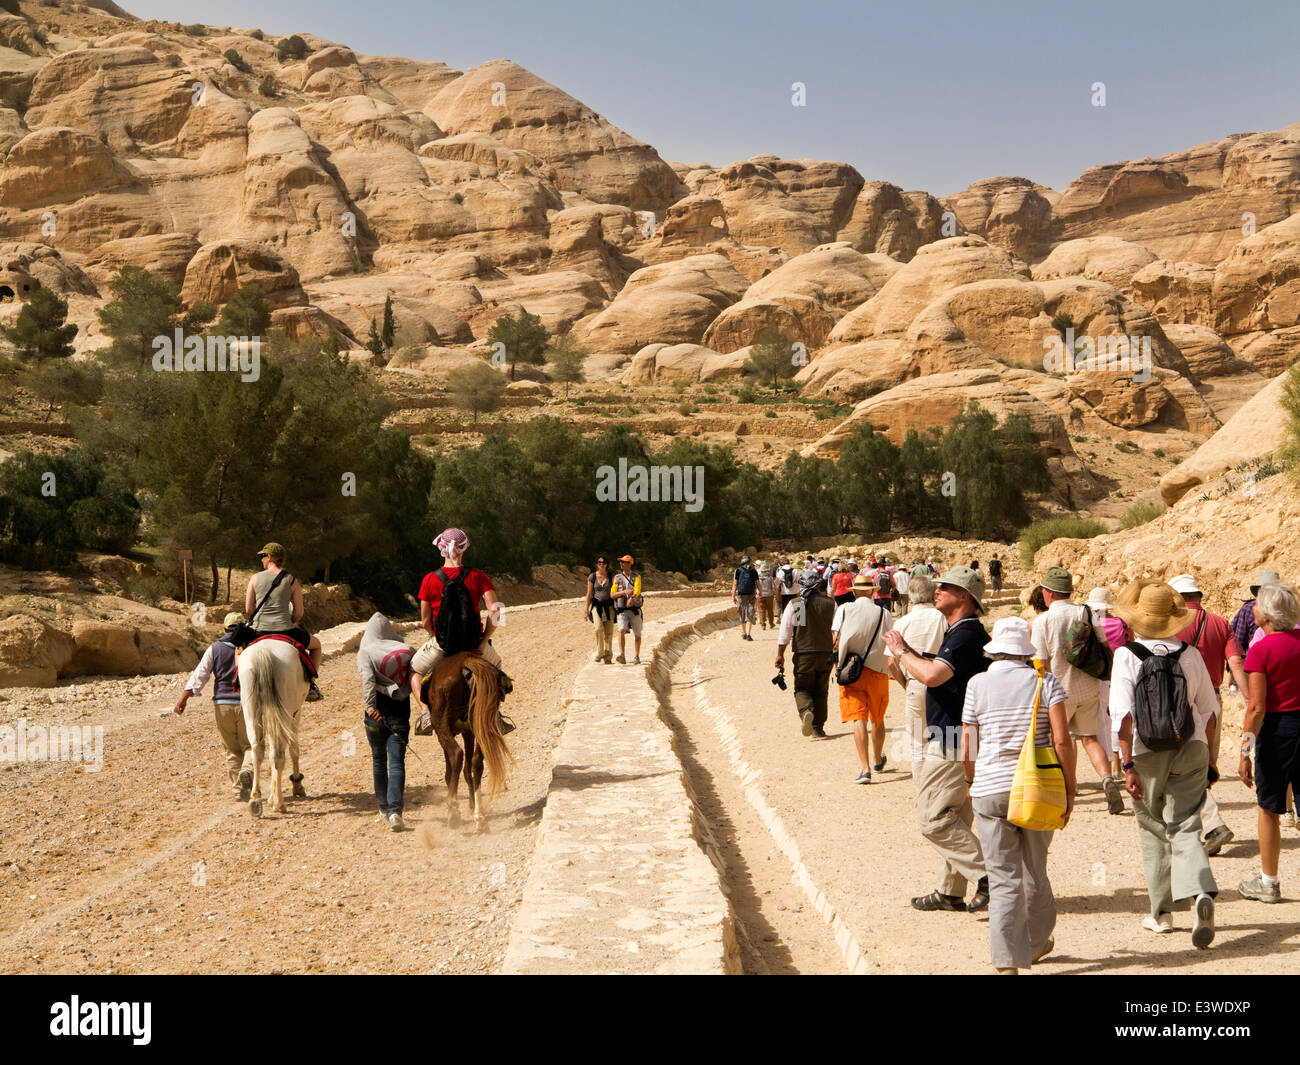 Jordan, Arabah, Petra, horses giving tourists ride to Al-Siq entrance, past walking visitors Stock Photo